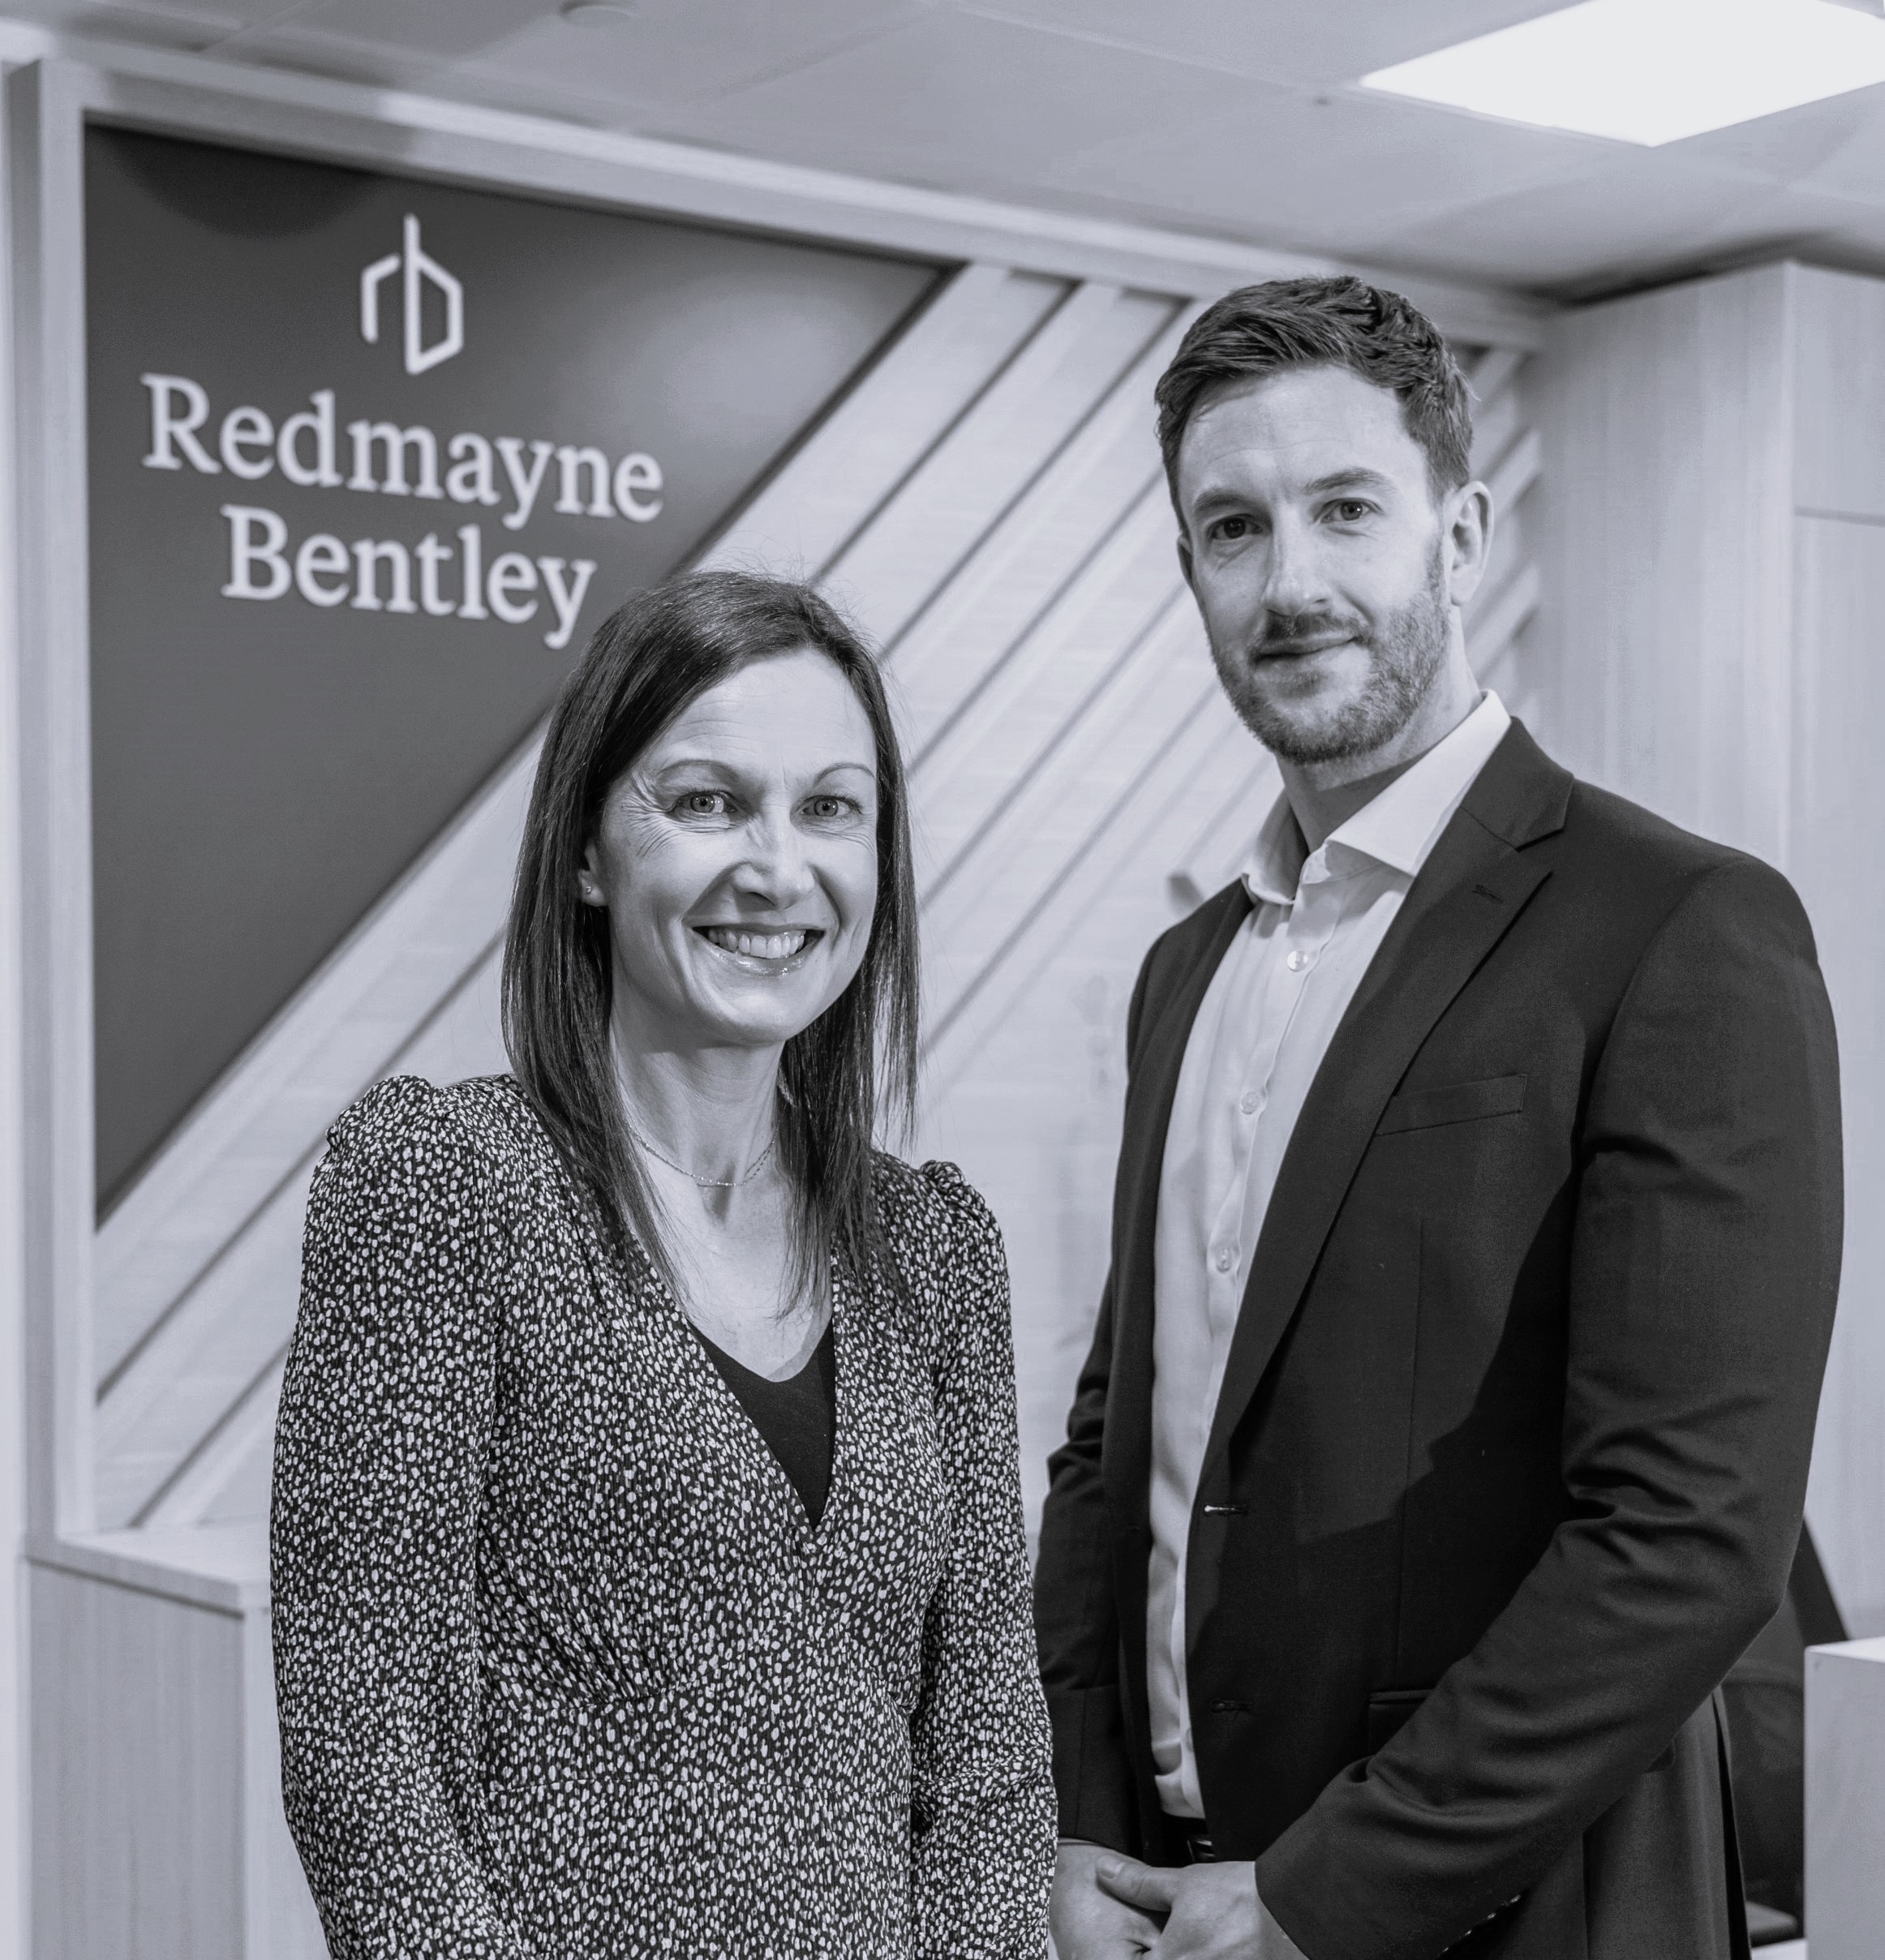 Redmayne Bentley welcomes back Carolyn Black to its Investment Management team